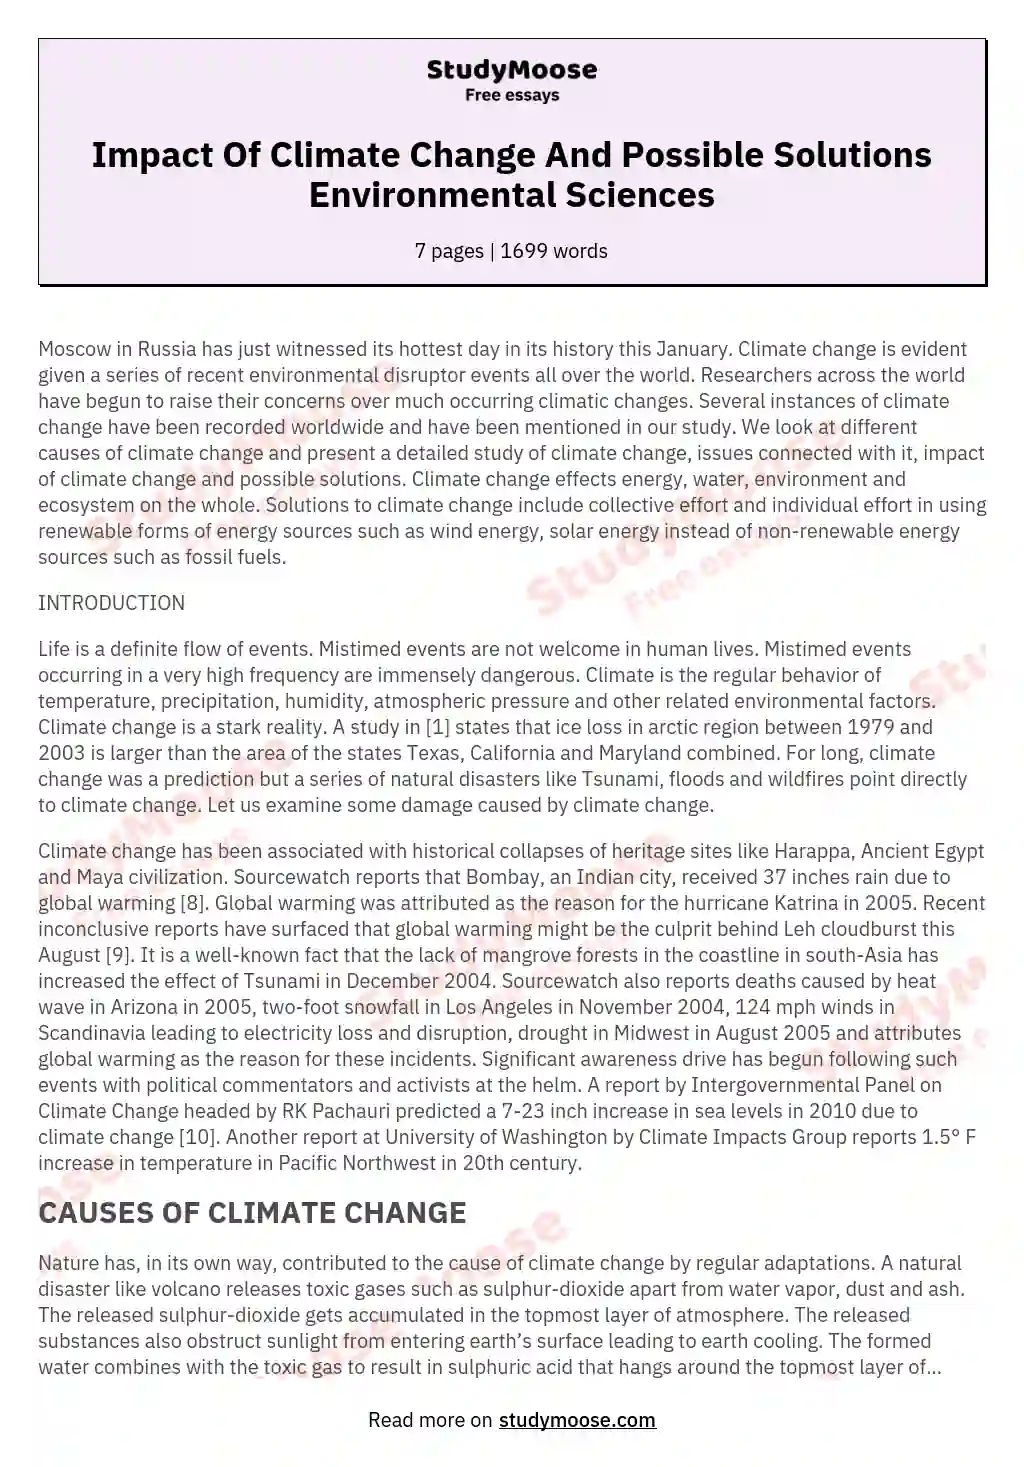 climate change essay upsc 2021